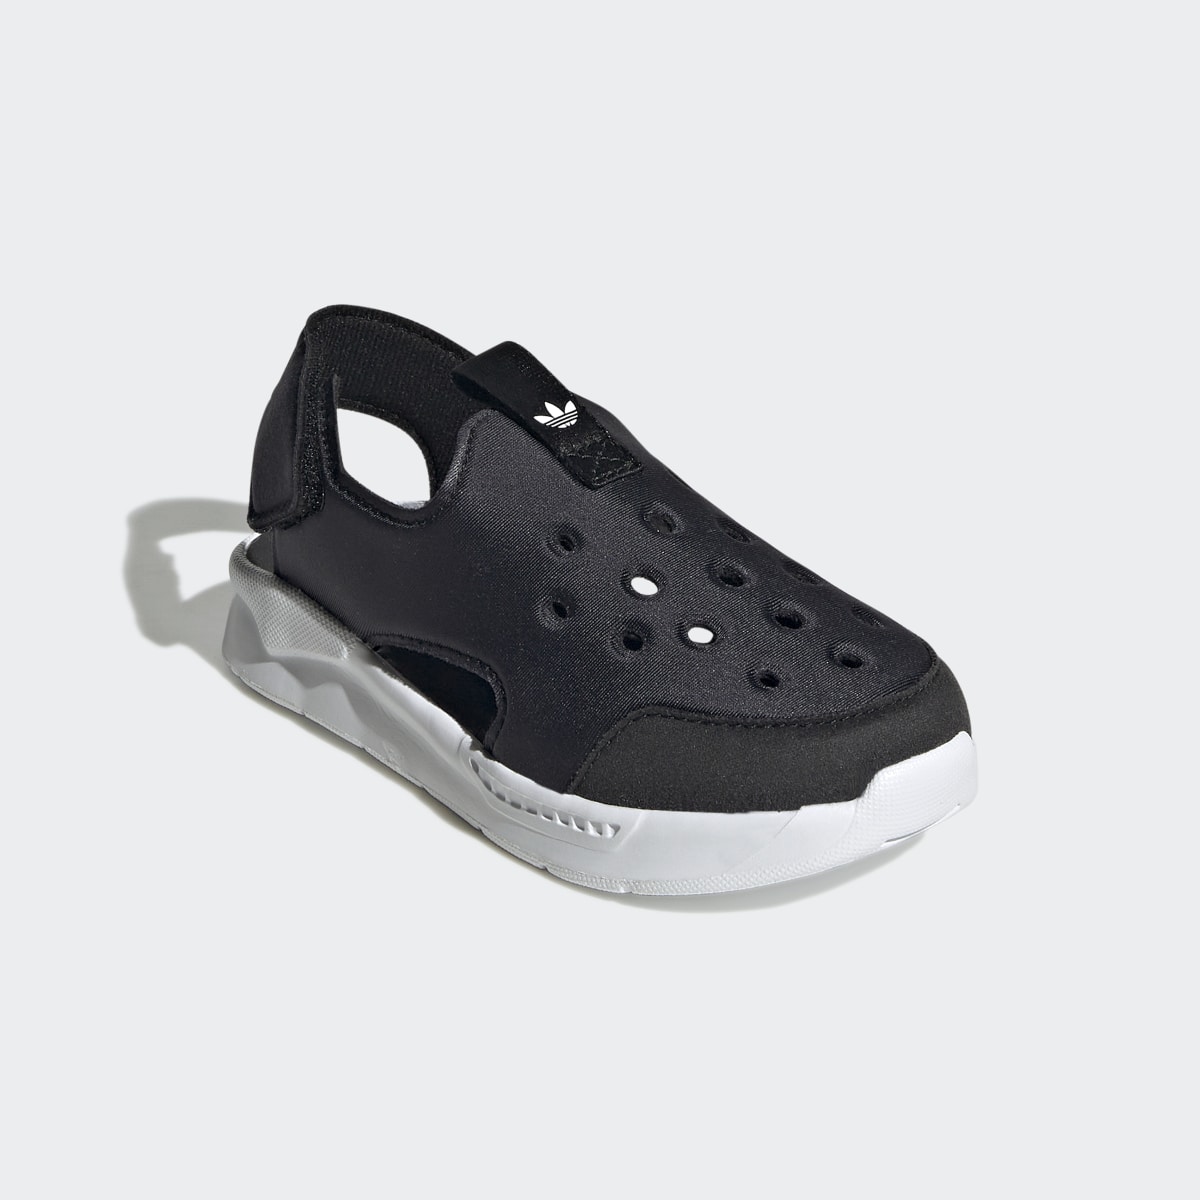 Adidas 360 2.0 Sandals. 5